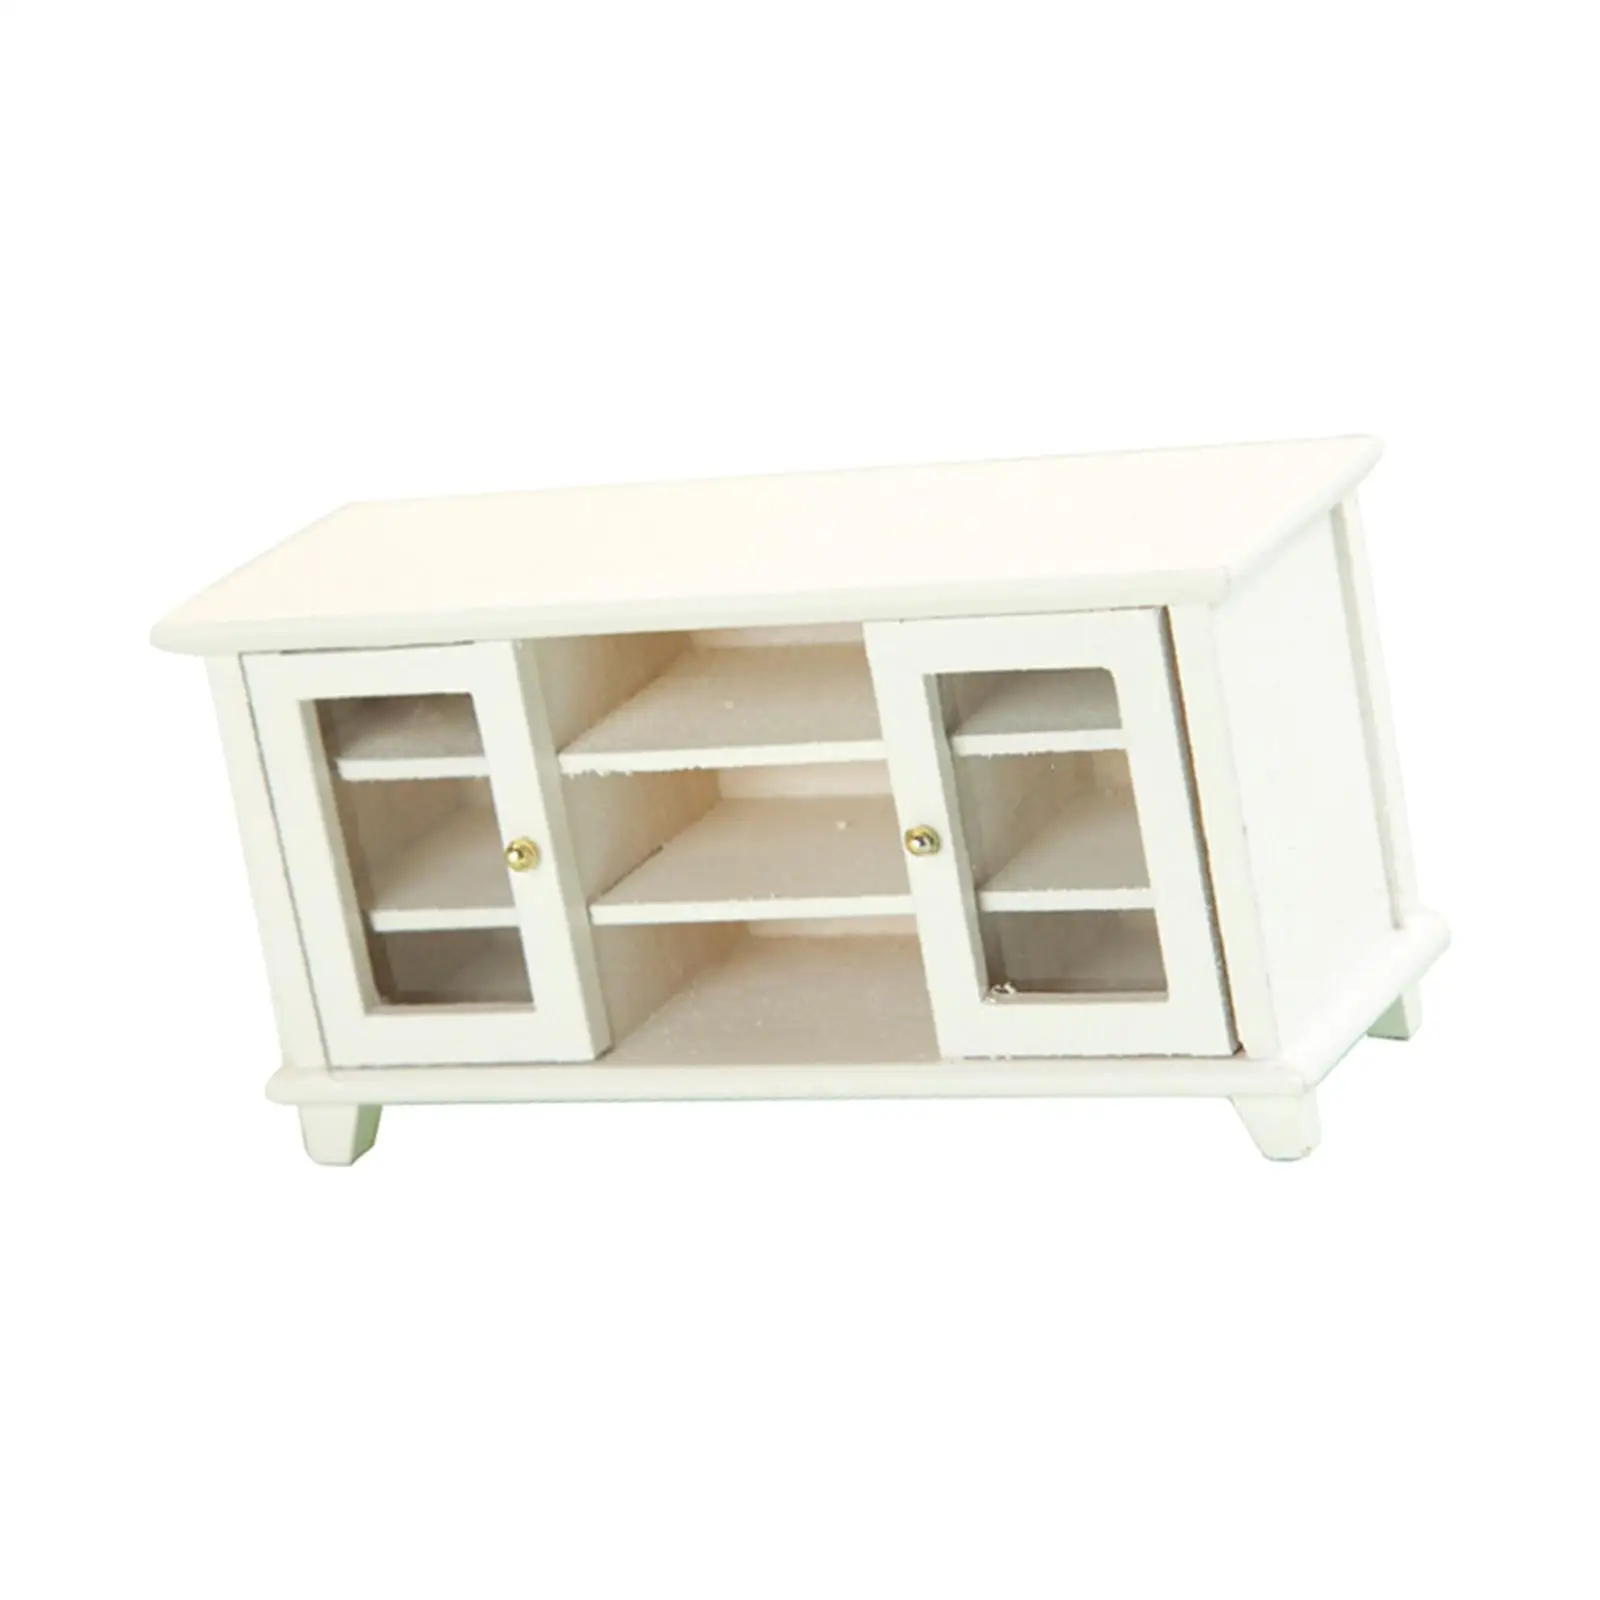 Miniature TV Cabinet Gift 1:12 Scale Dollhouse Accessories for Photo Props Miniature Scene Diorama Living Room Decoration